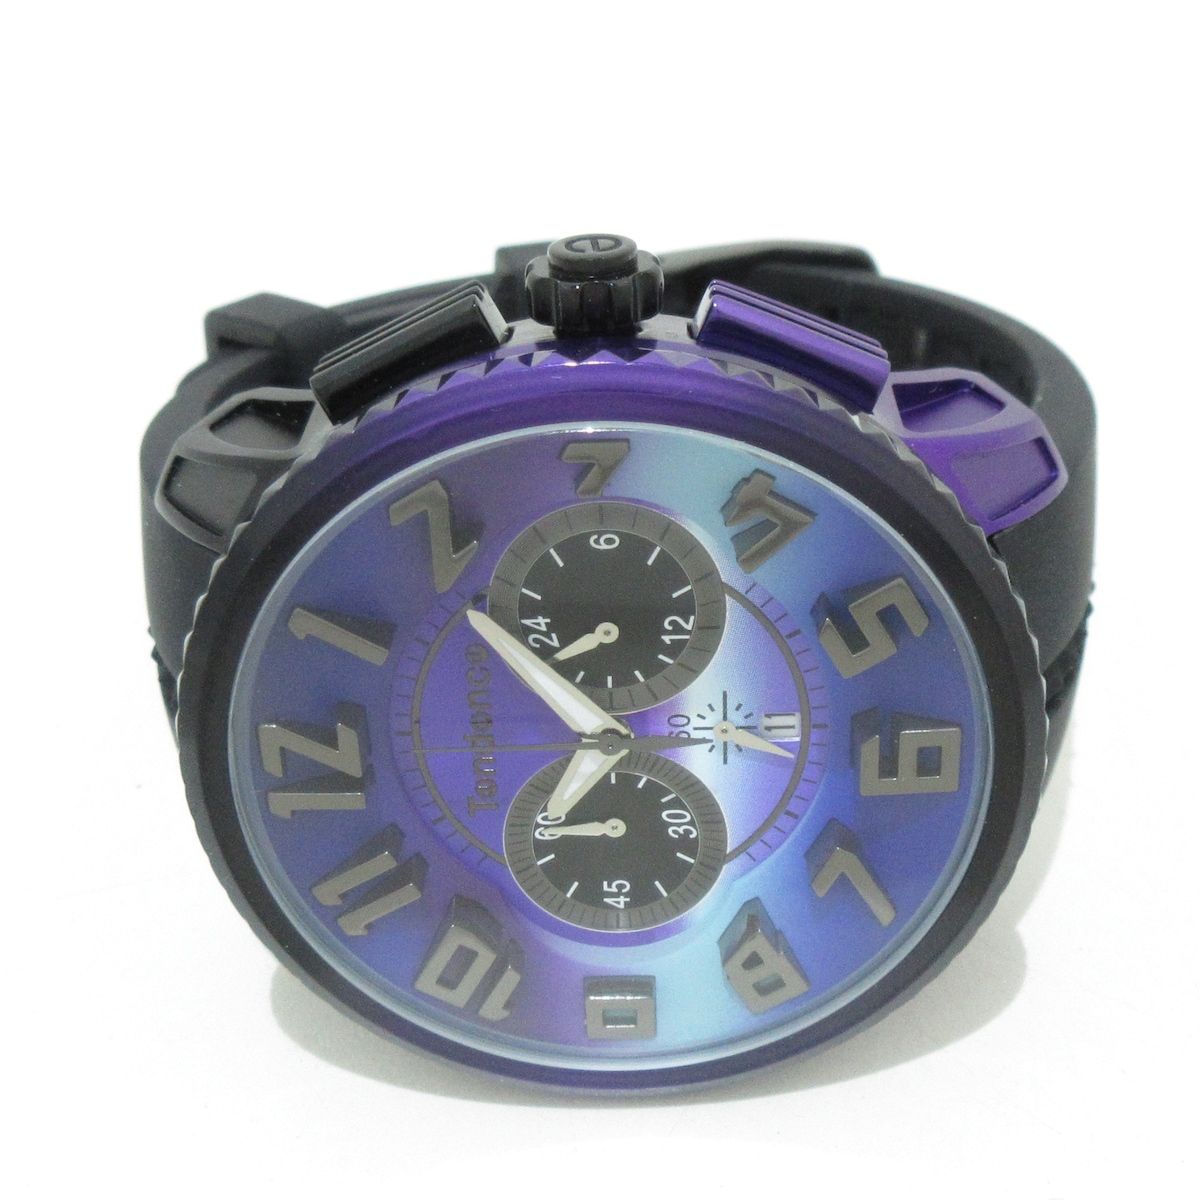 TENDENCE(テンデンス) 腕時計美品 De'Color TY146103 メンズ クロノ ...